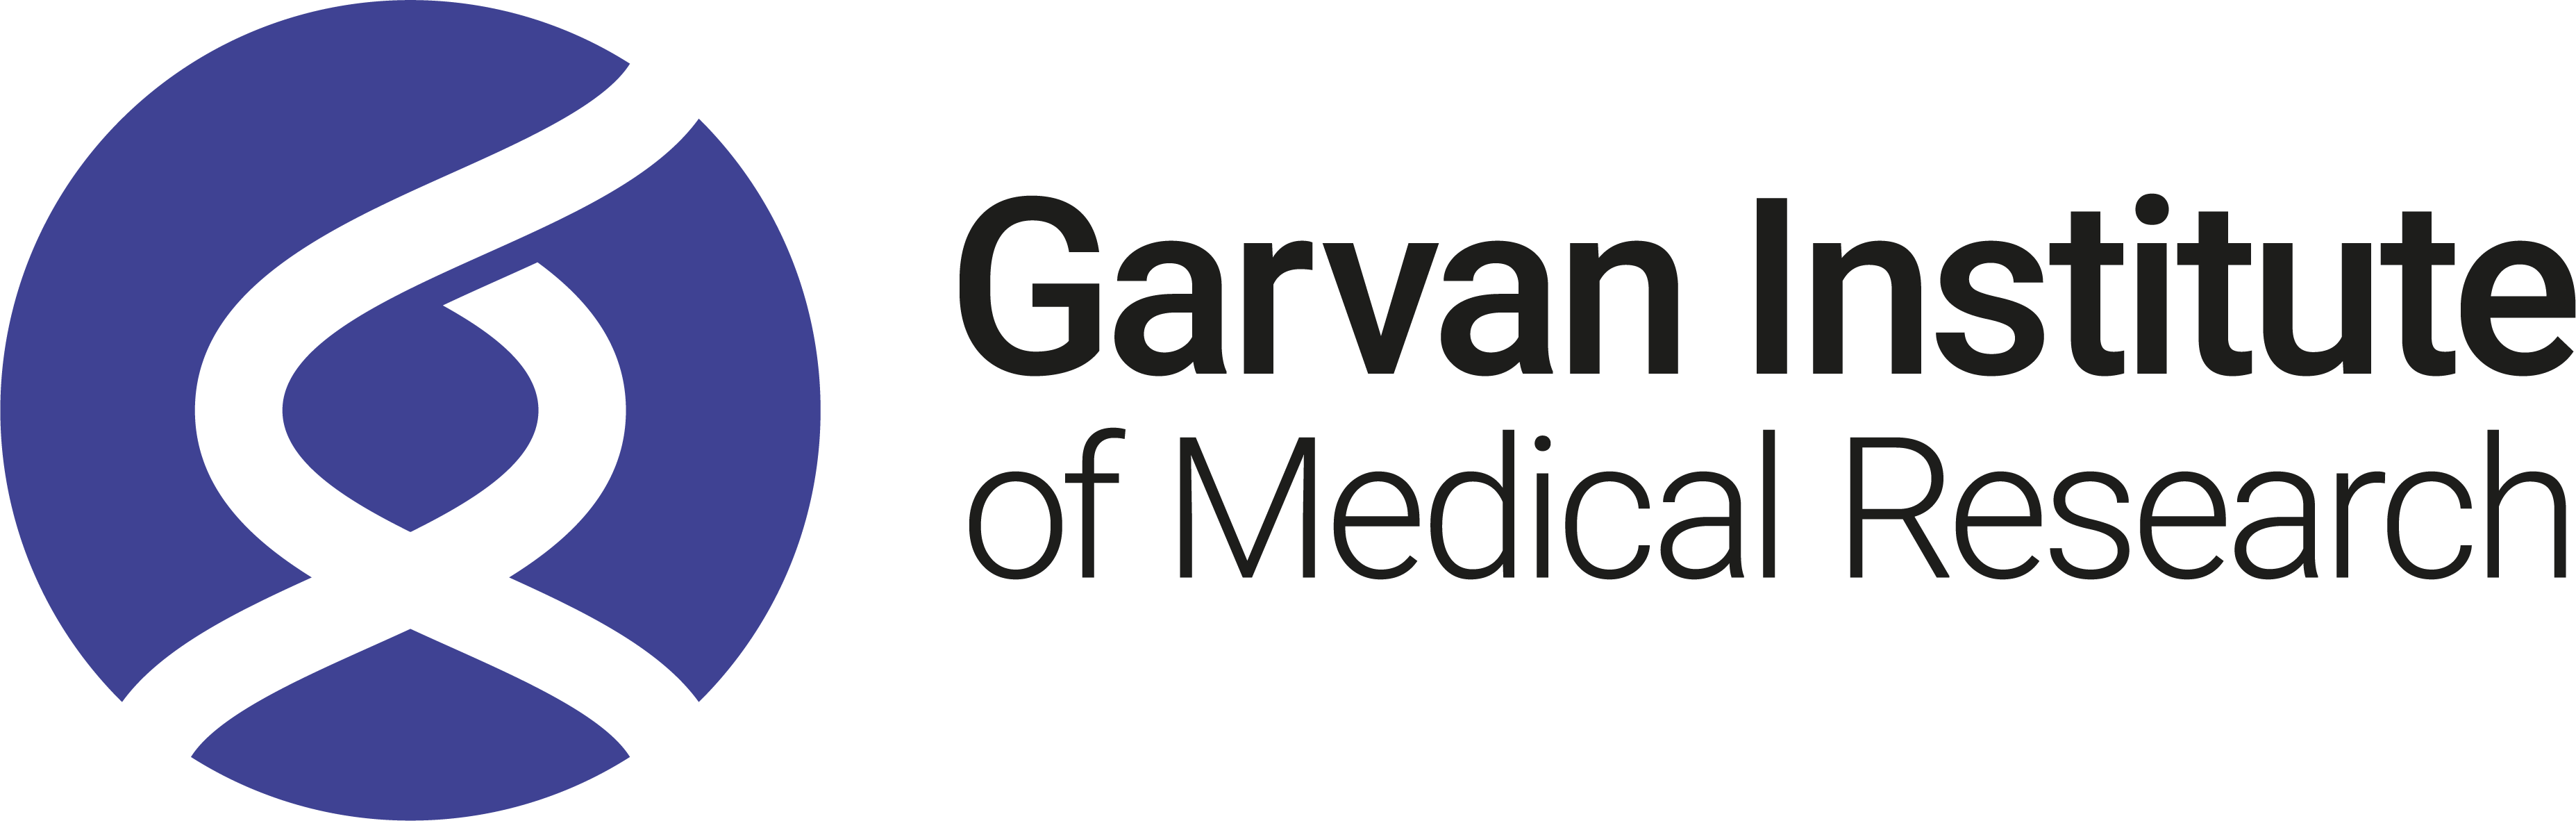 Garvan_Logo1.jpg